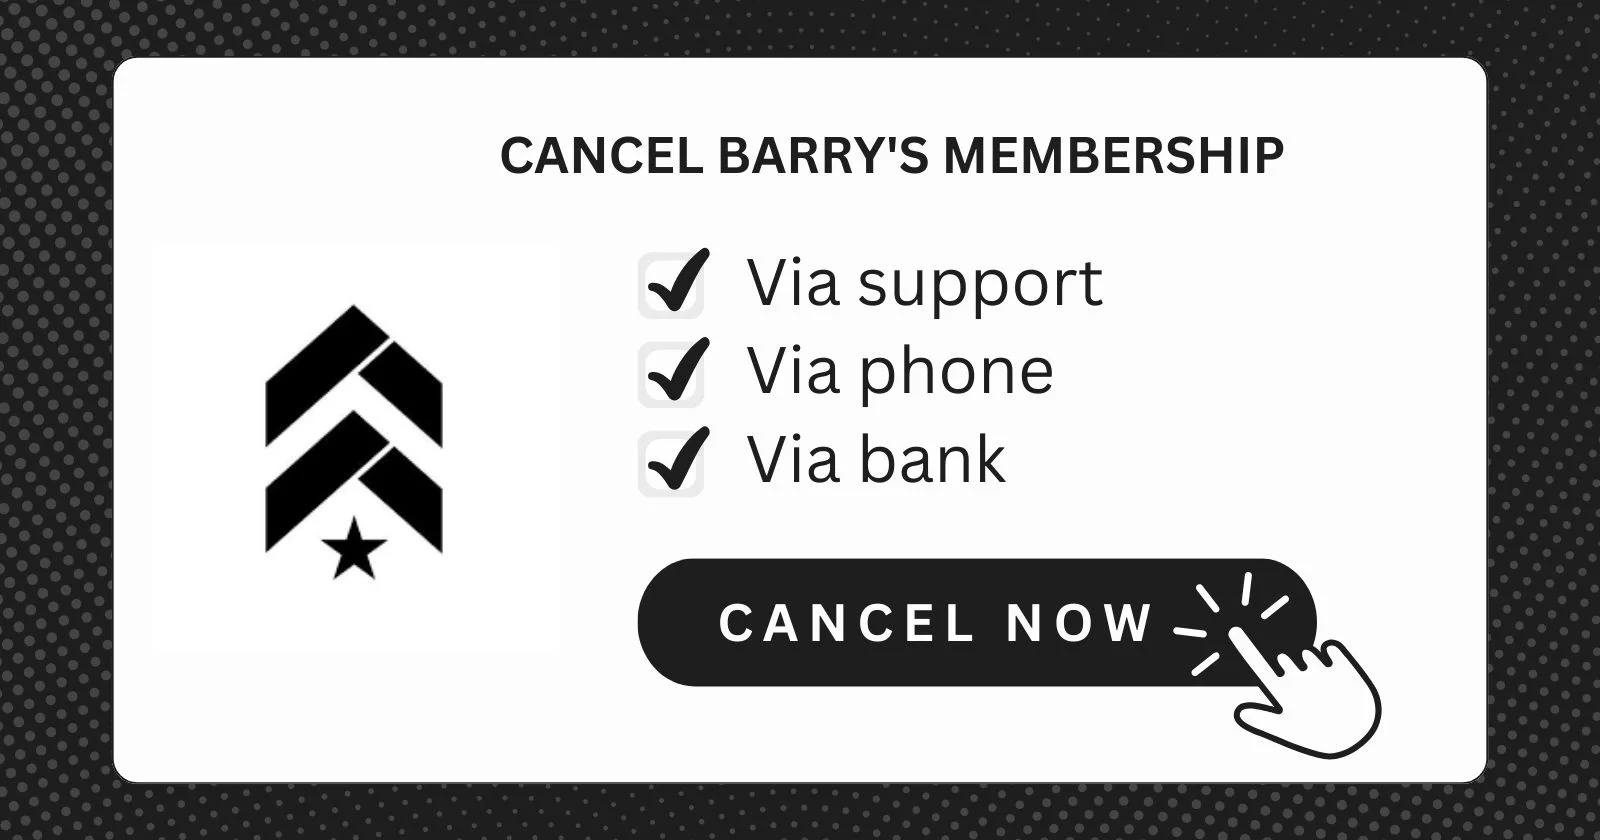 Cancel Barry's Membership